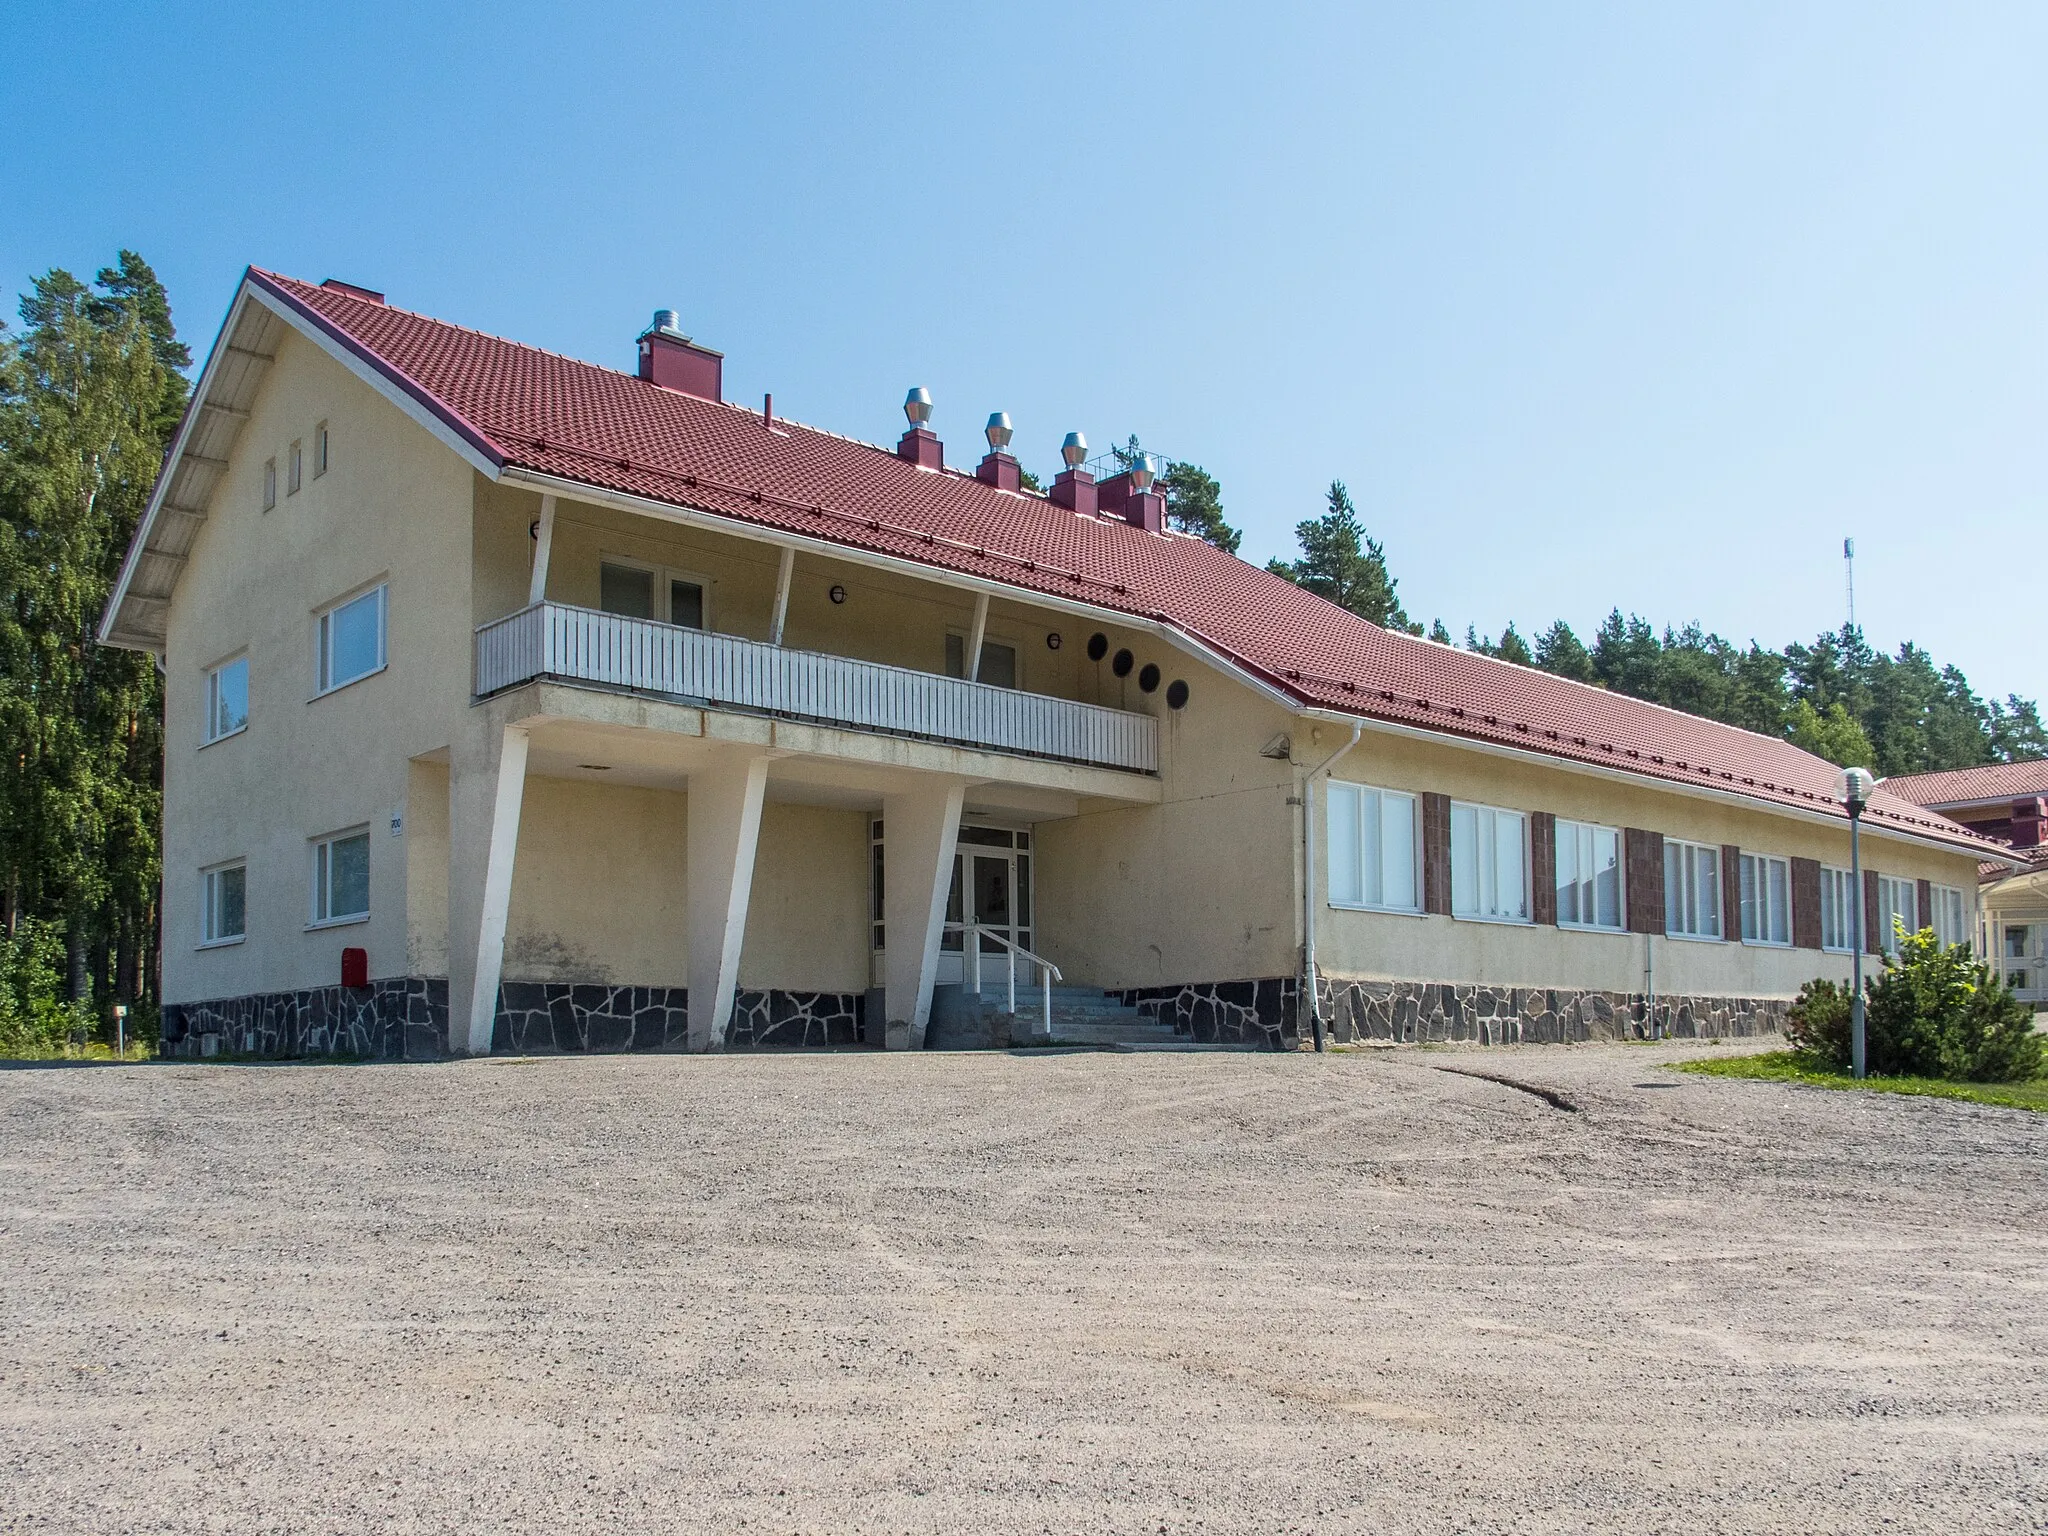 Photo showing: School in Askainen, Masku, Finland.